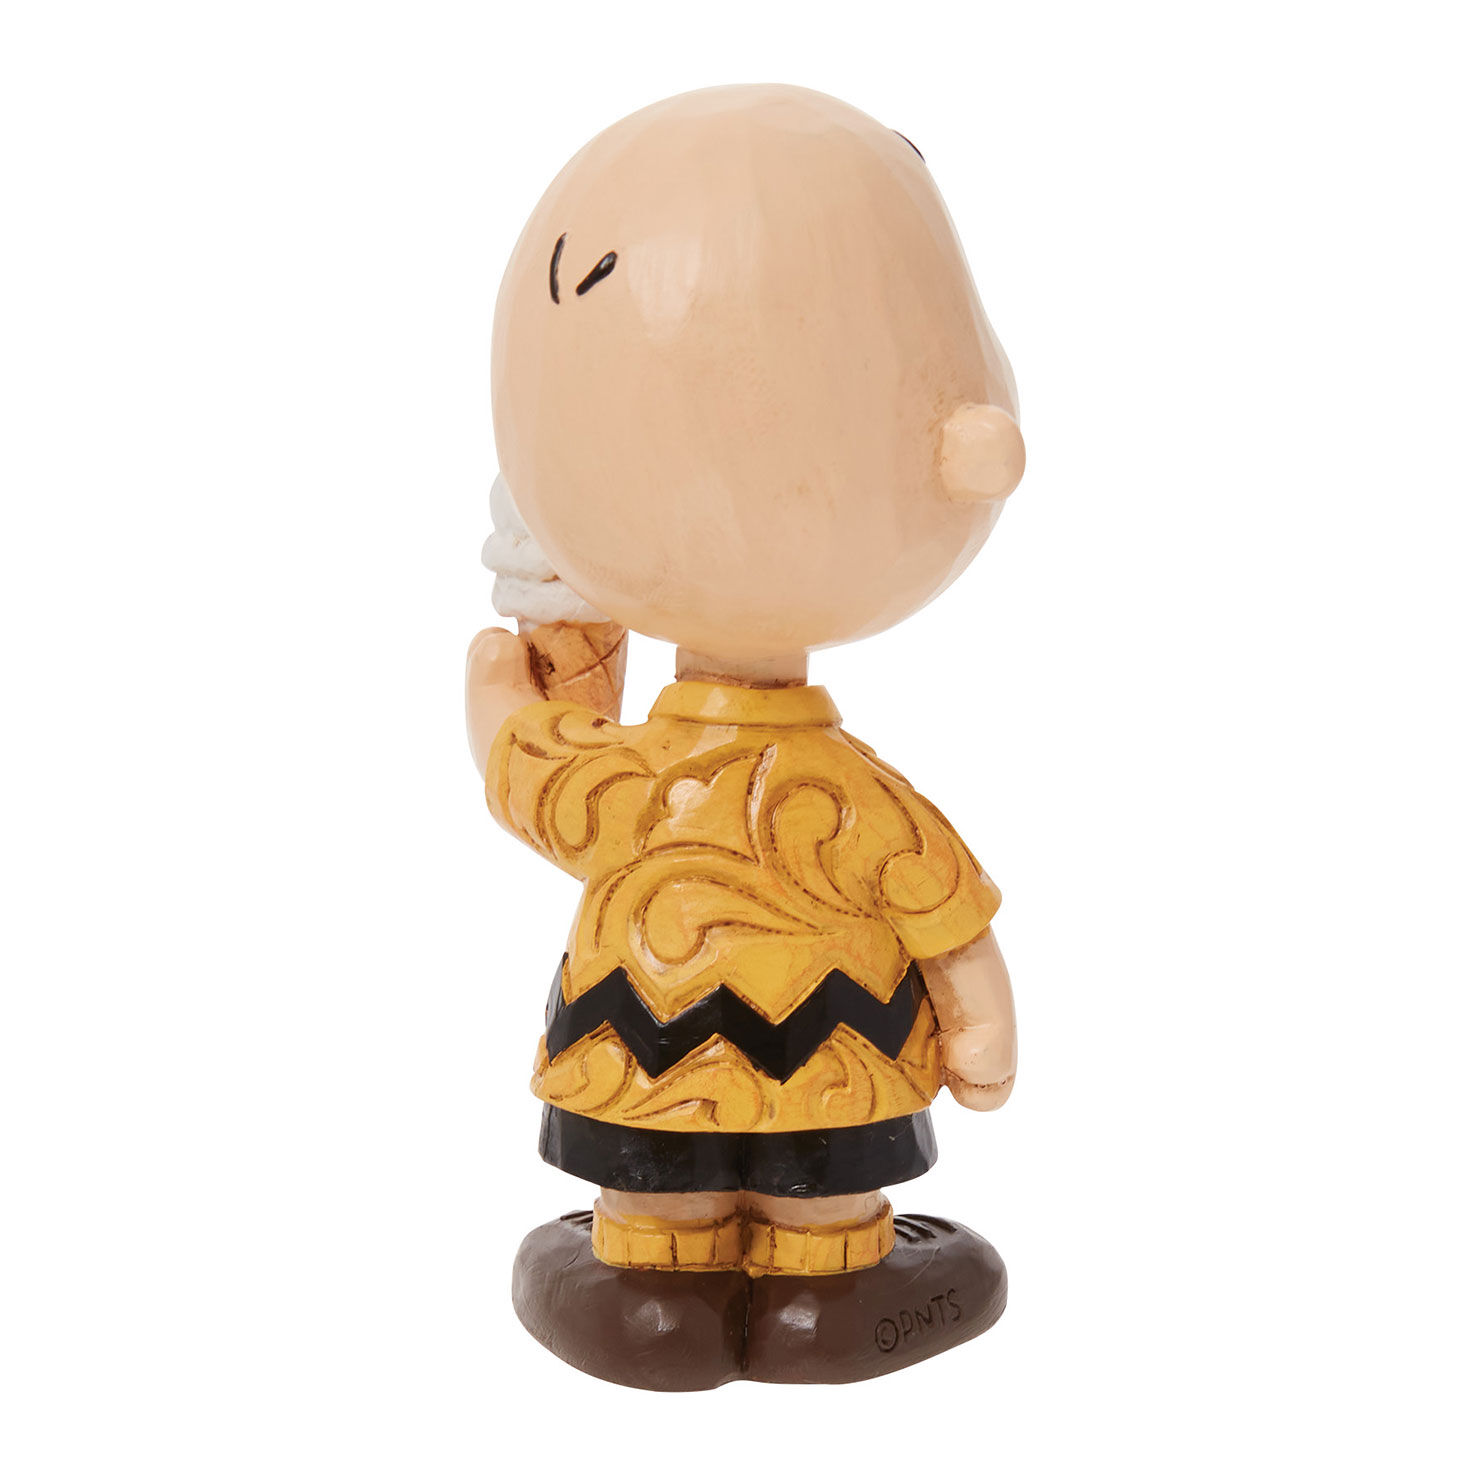 Jim Shore Peanuts Mini Charlie Brown With Ice Cream Cone Figurine, 3.25" for only USD 29.99 | Hallmark